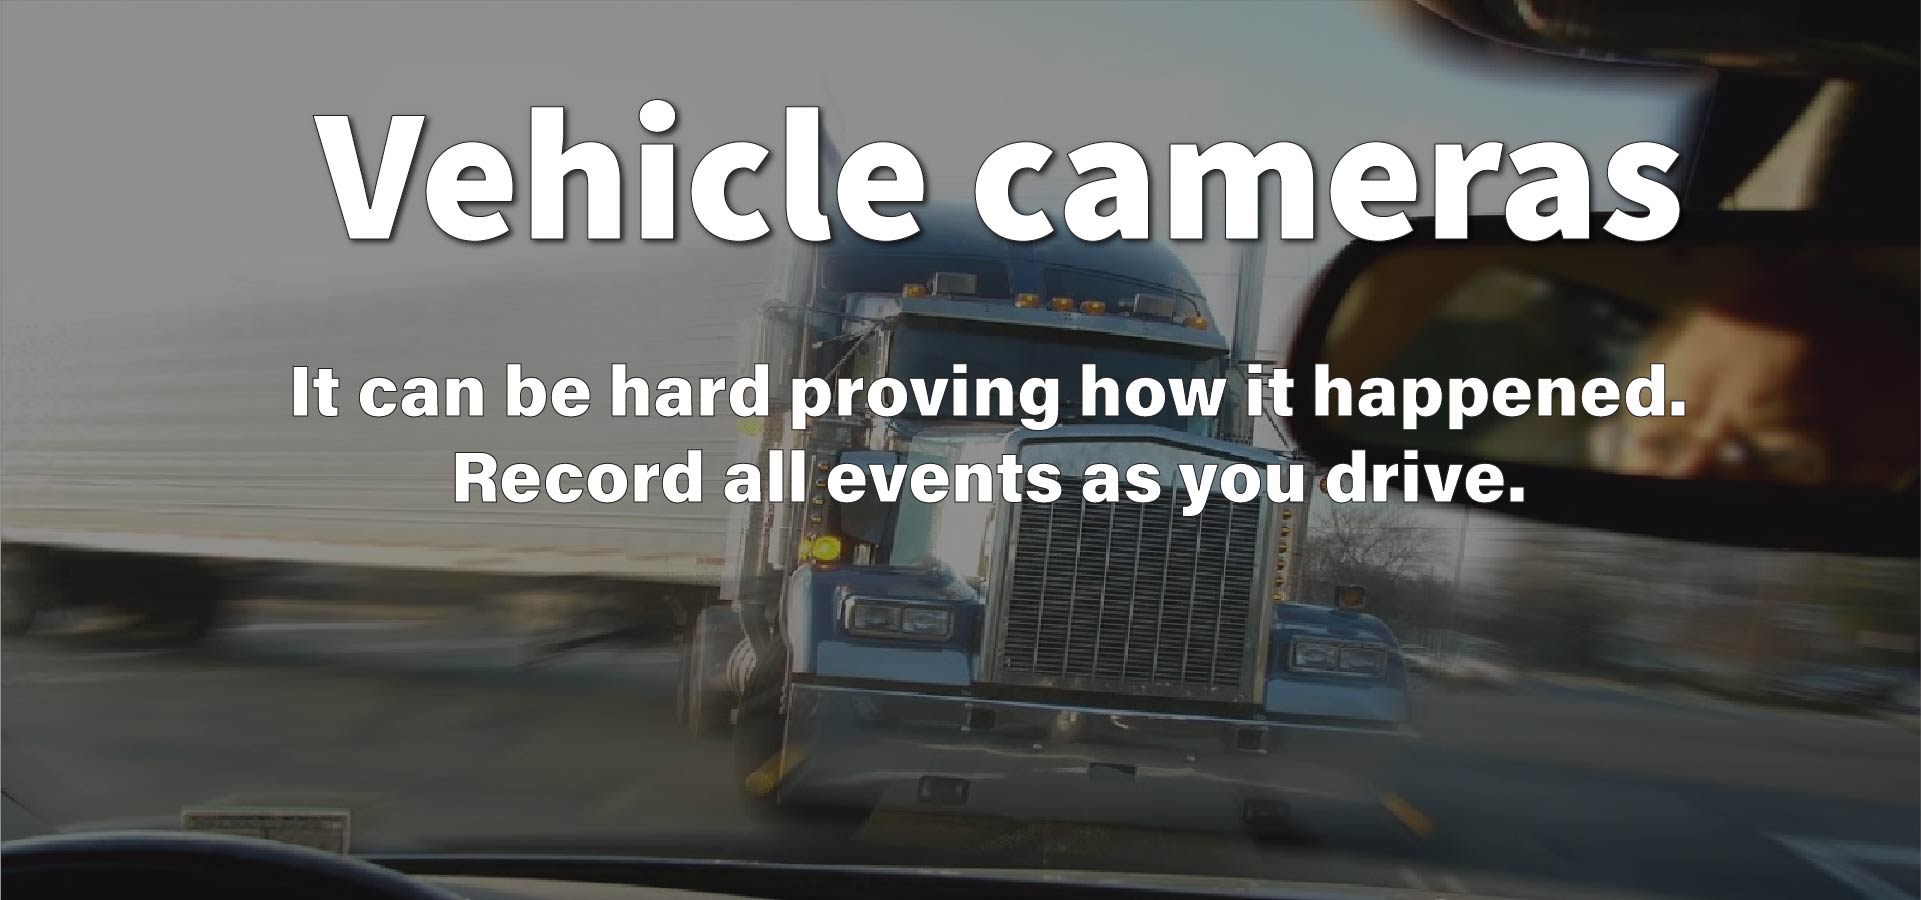 Vehicle cameras